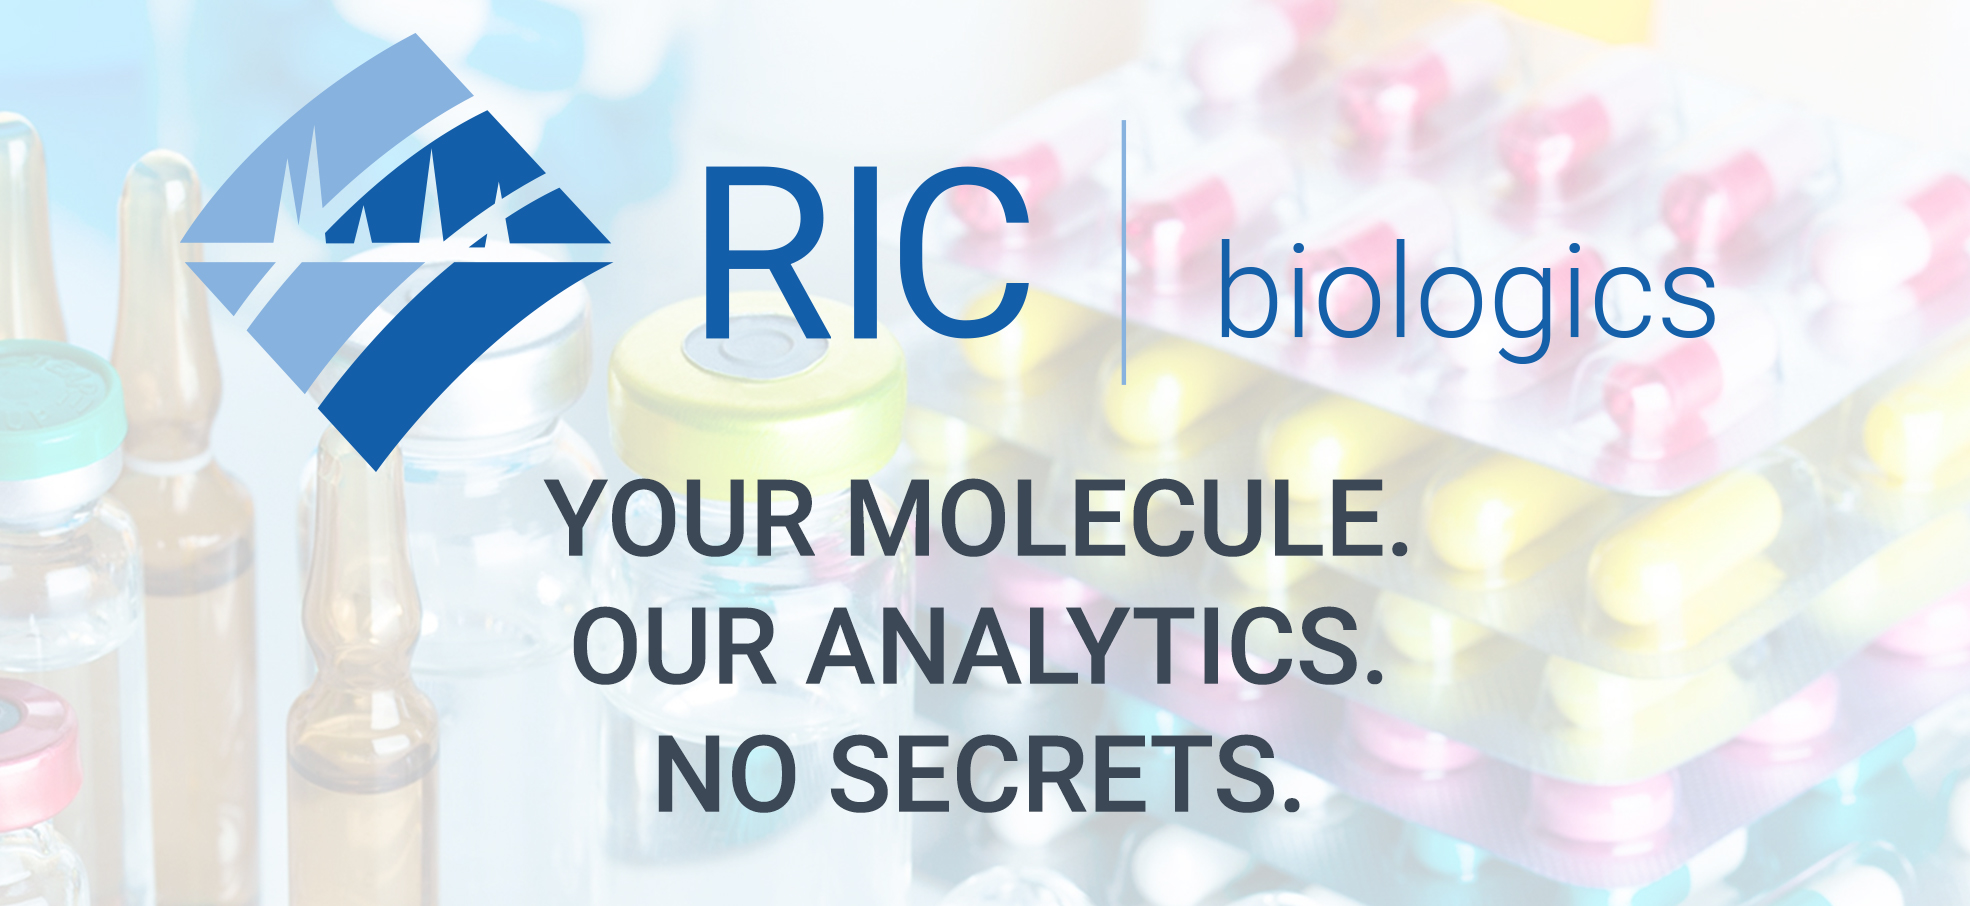 Logo for RIC biologics